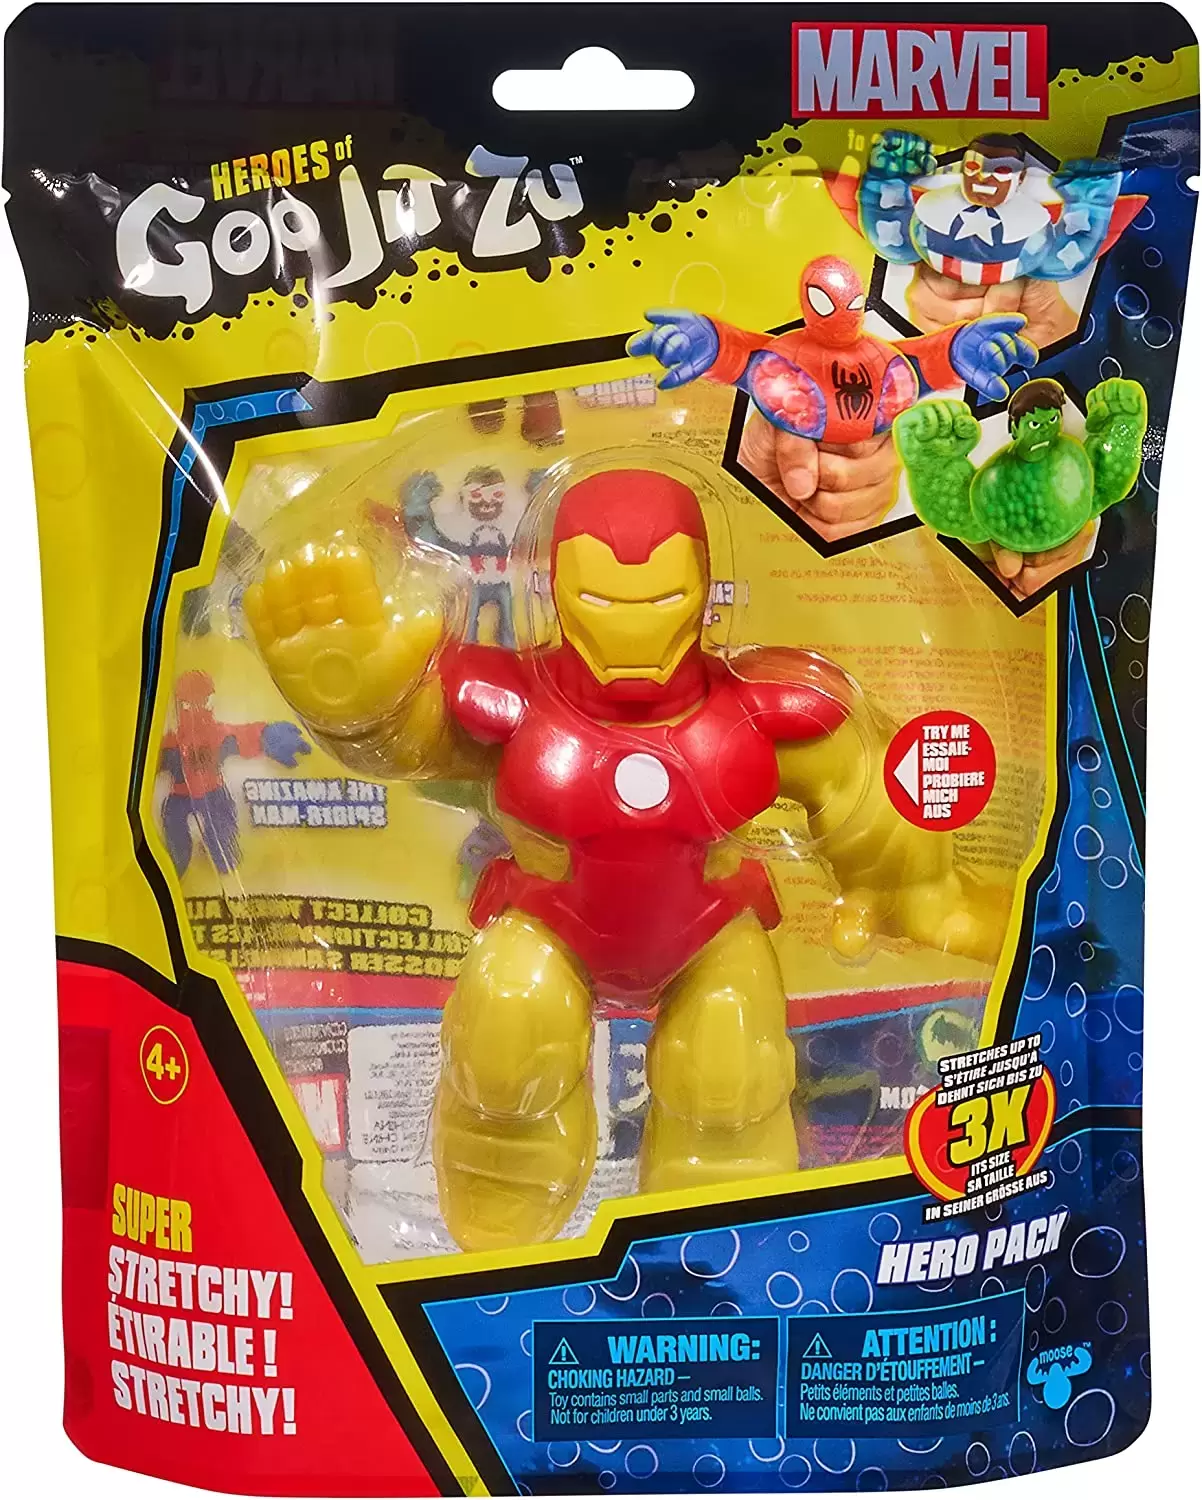 Heroes of Goo Jit Zu - Marvel - The invincible Iron Man